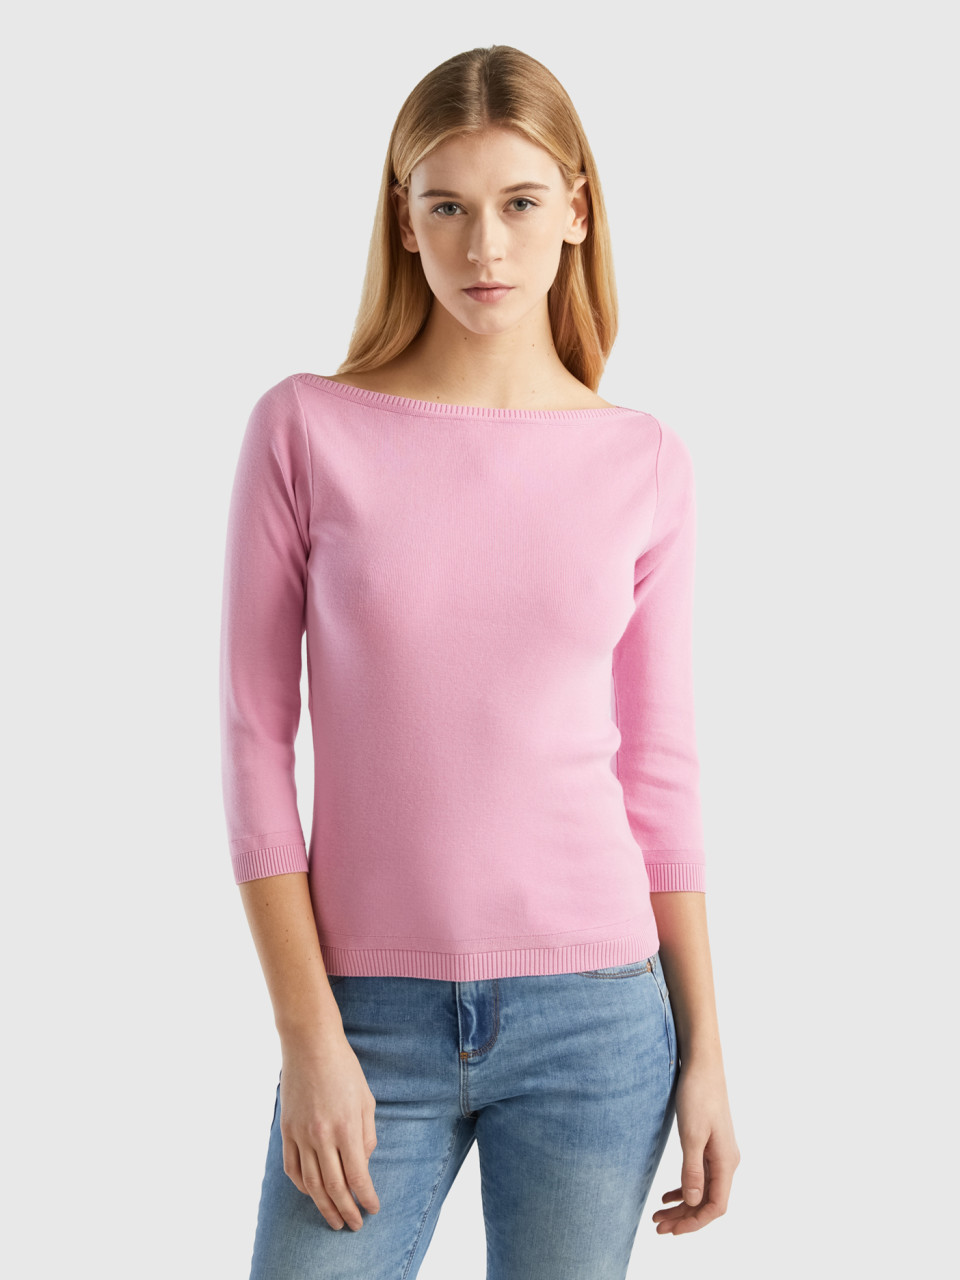 Benetton, 100% Cotton Boat Neck Sweater, Pastel Pink, Women